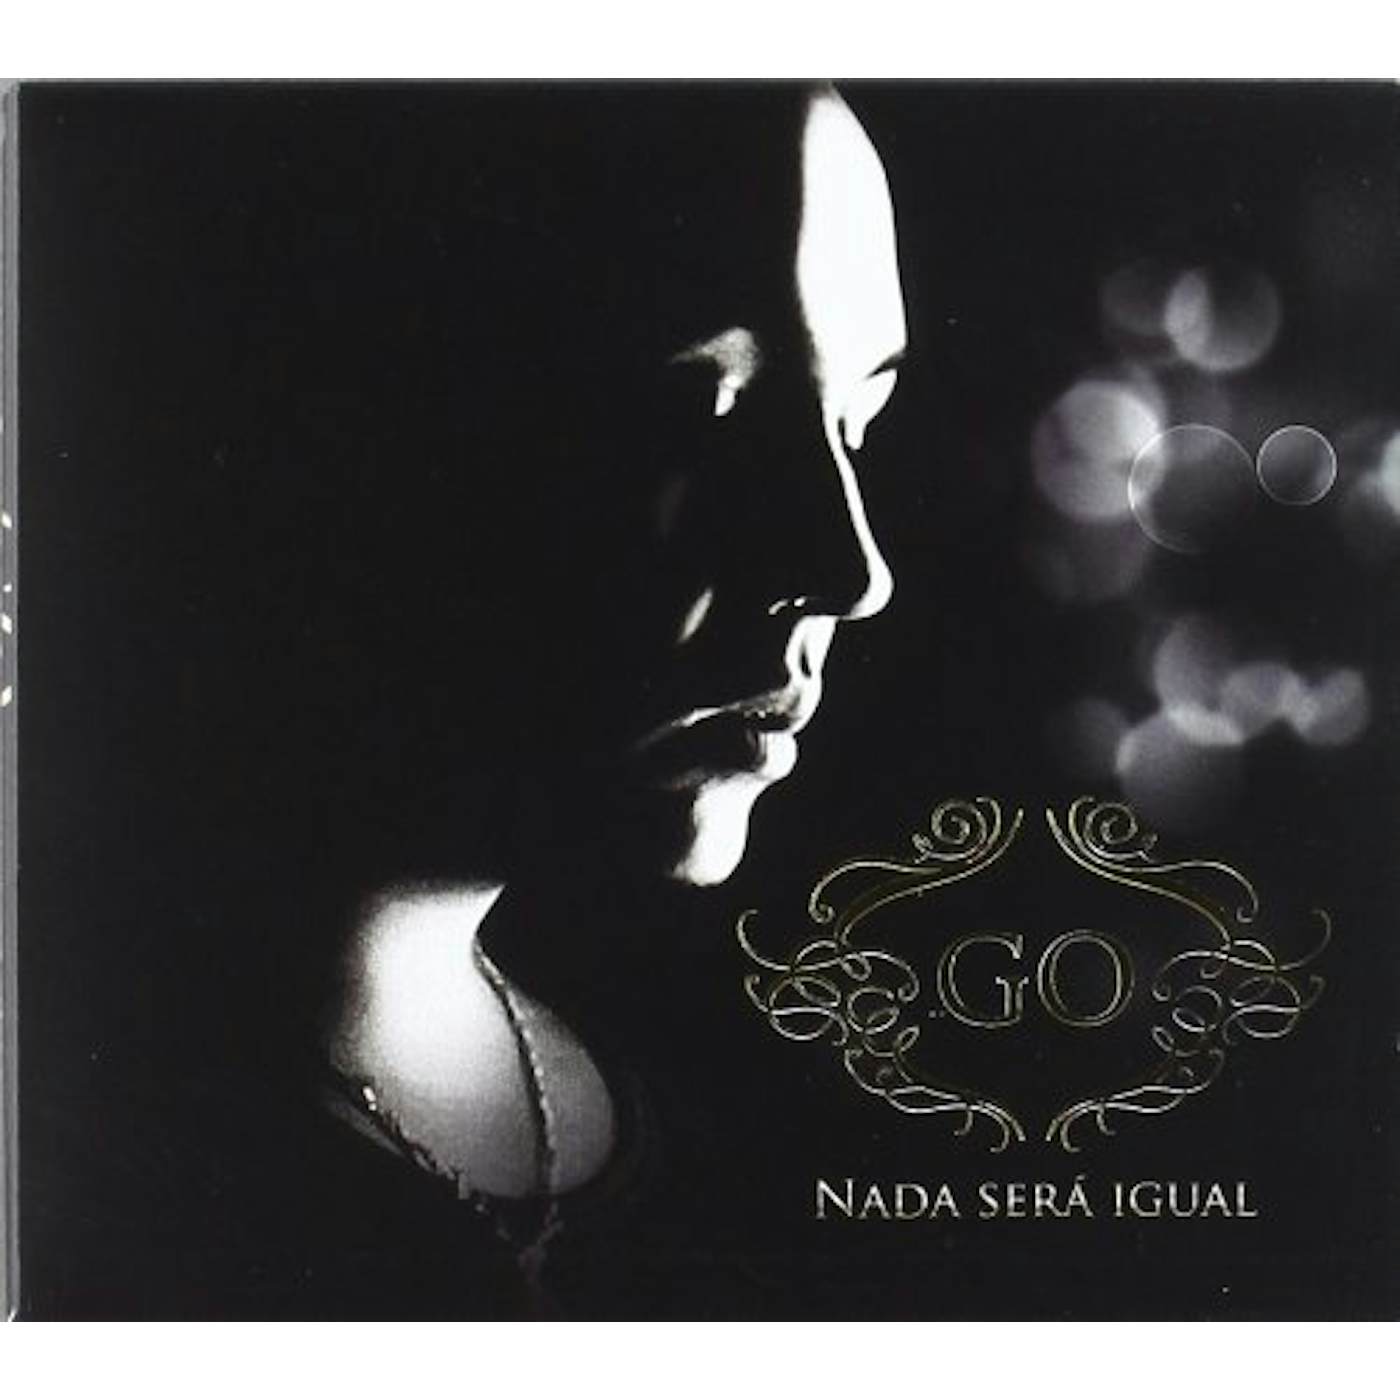 The Go NADA SERA IGUAL CD